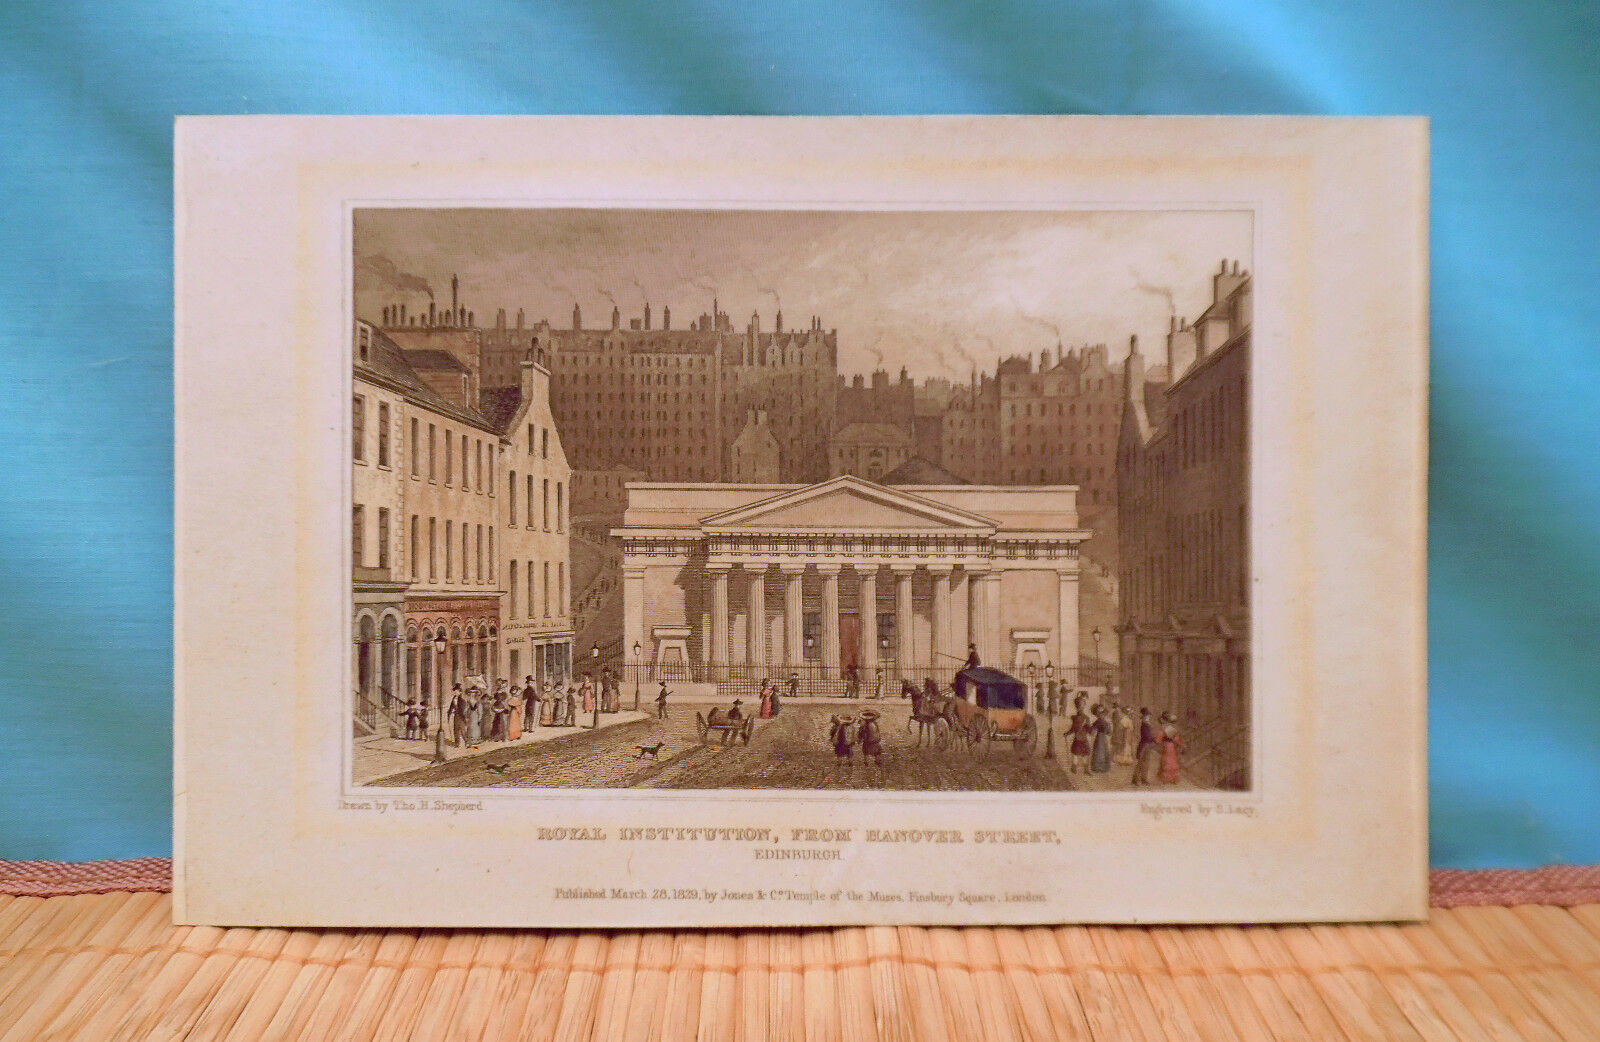 Antique Print - Royal Institution, From Hanover Street, Edinburgh  1829